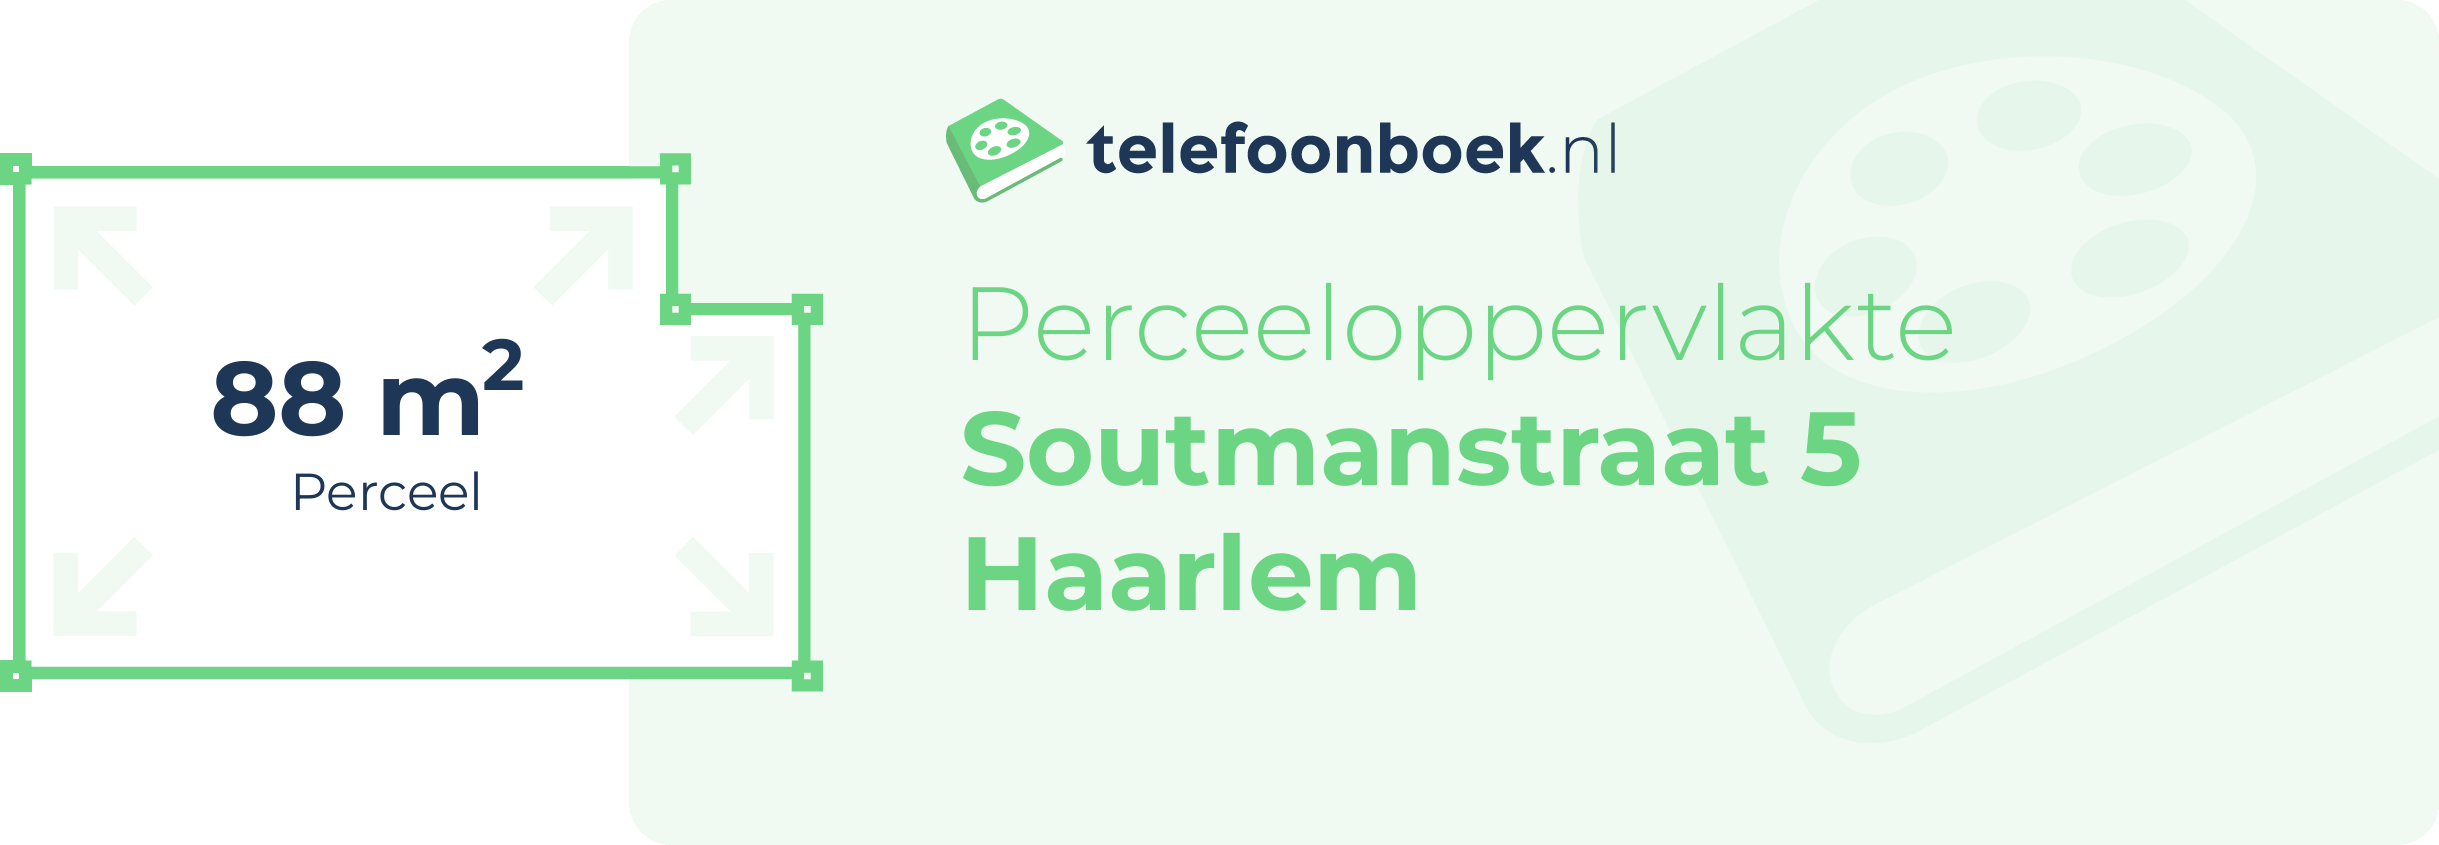 Perceeloppervlakte Soutmanstraat 5 Haarlem